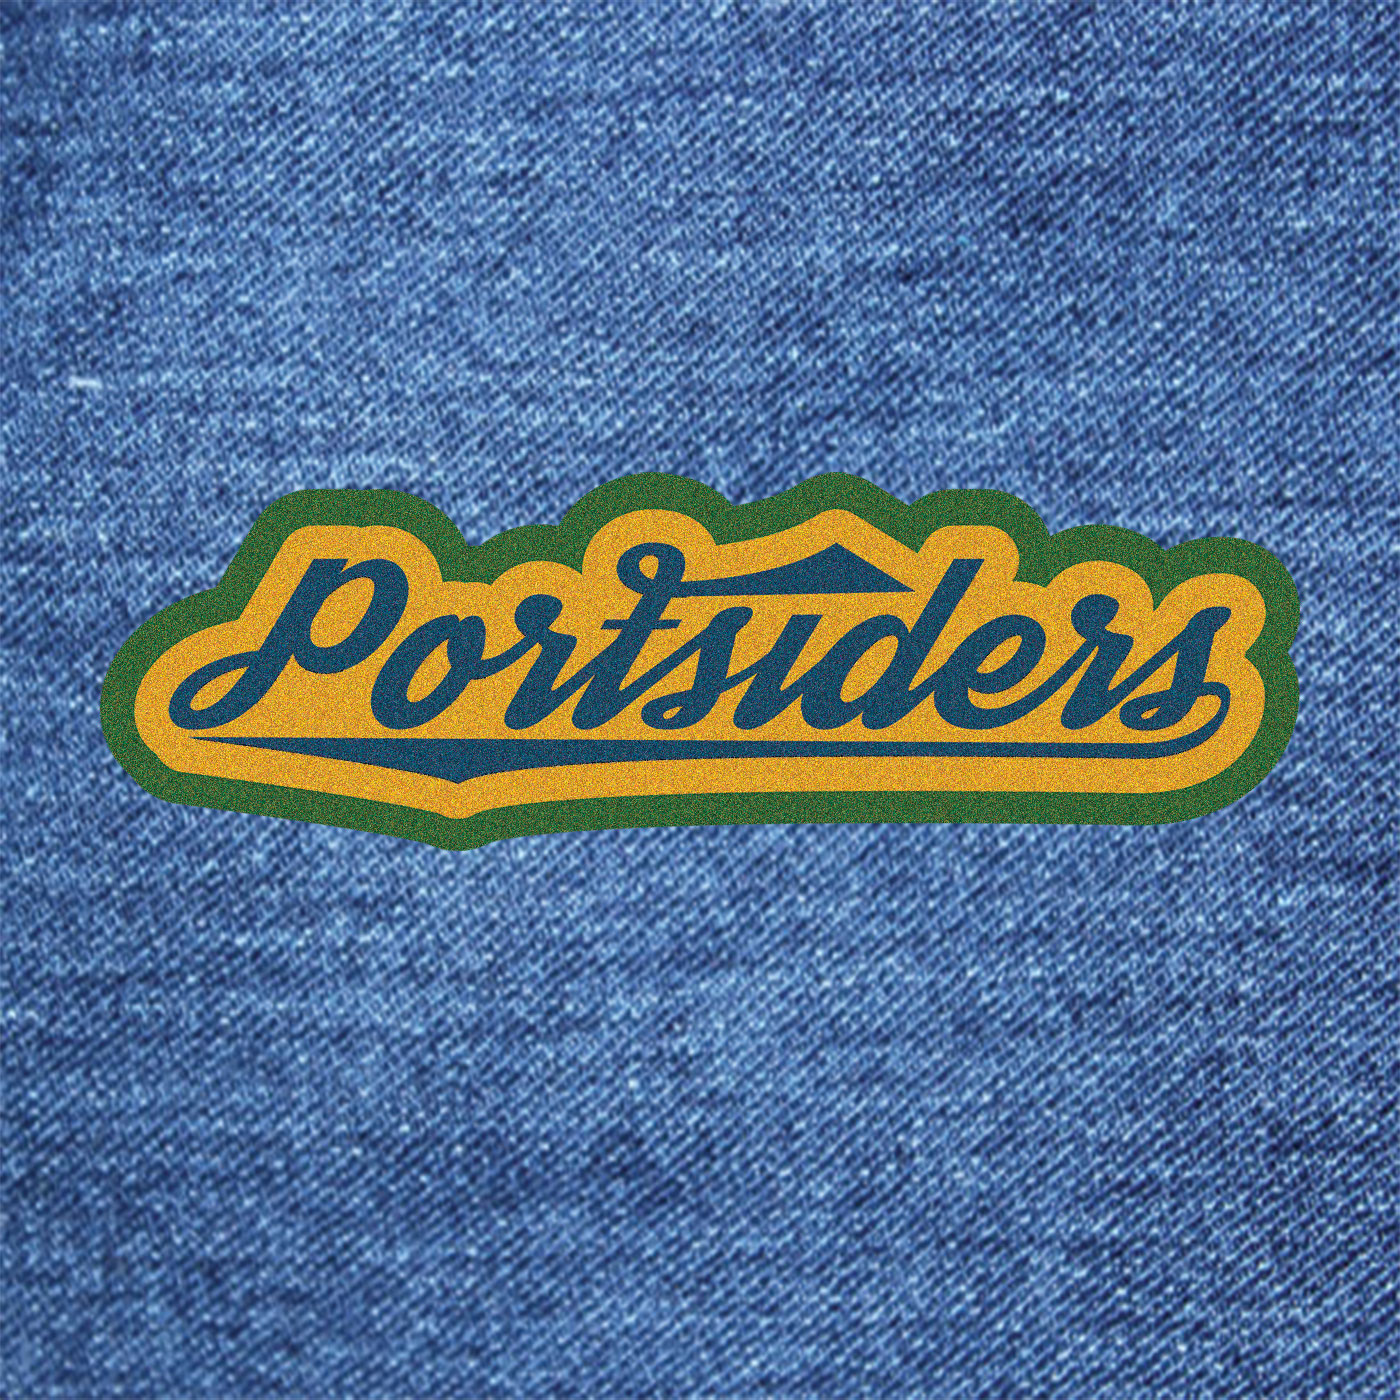 portsiders logo on denim background